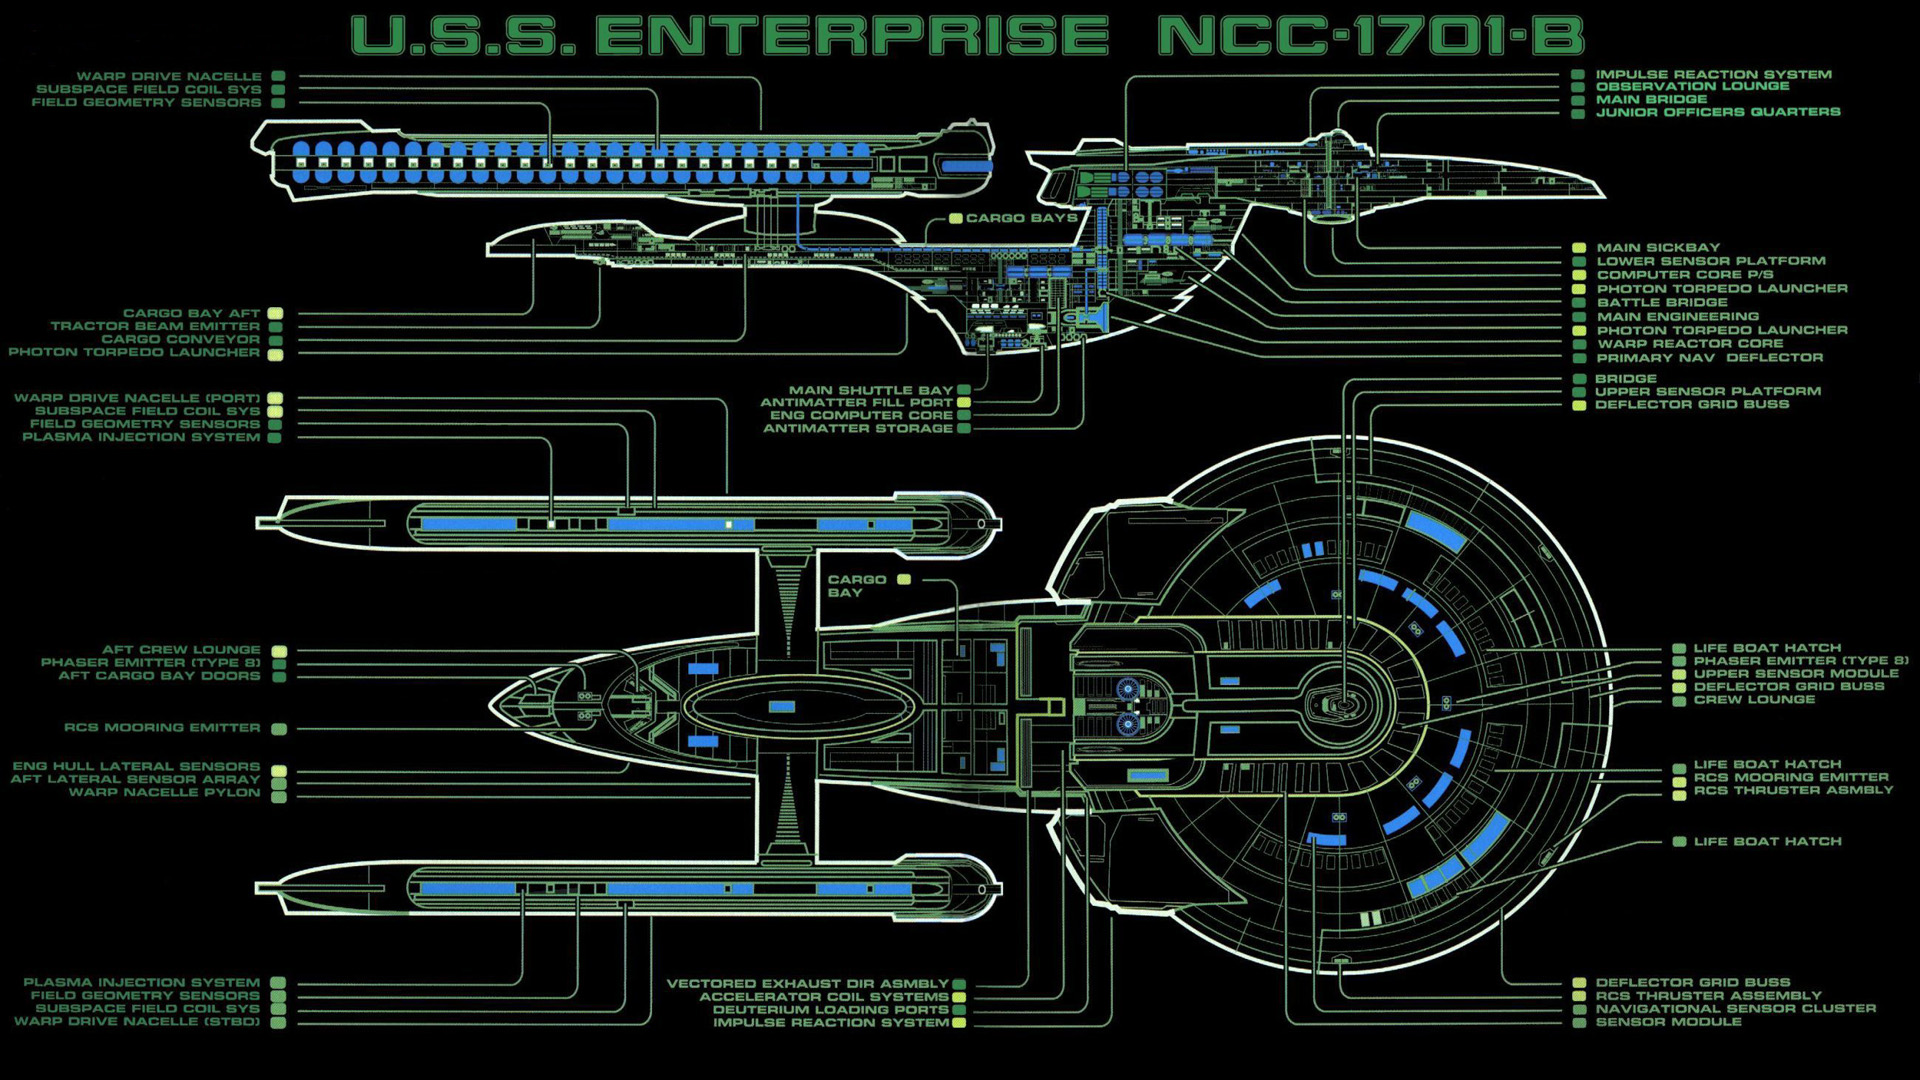 General 1920x1080 Star Trek USS Enterprise (spaceship) Excelsior Class USS Enterprise NCC-1701 B Deck Plans Star Trek Ships science fiction vehicle TV series